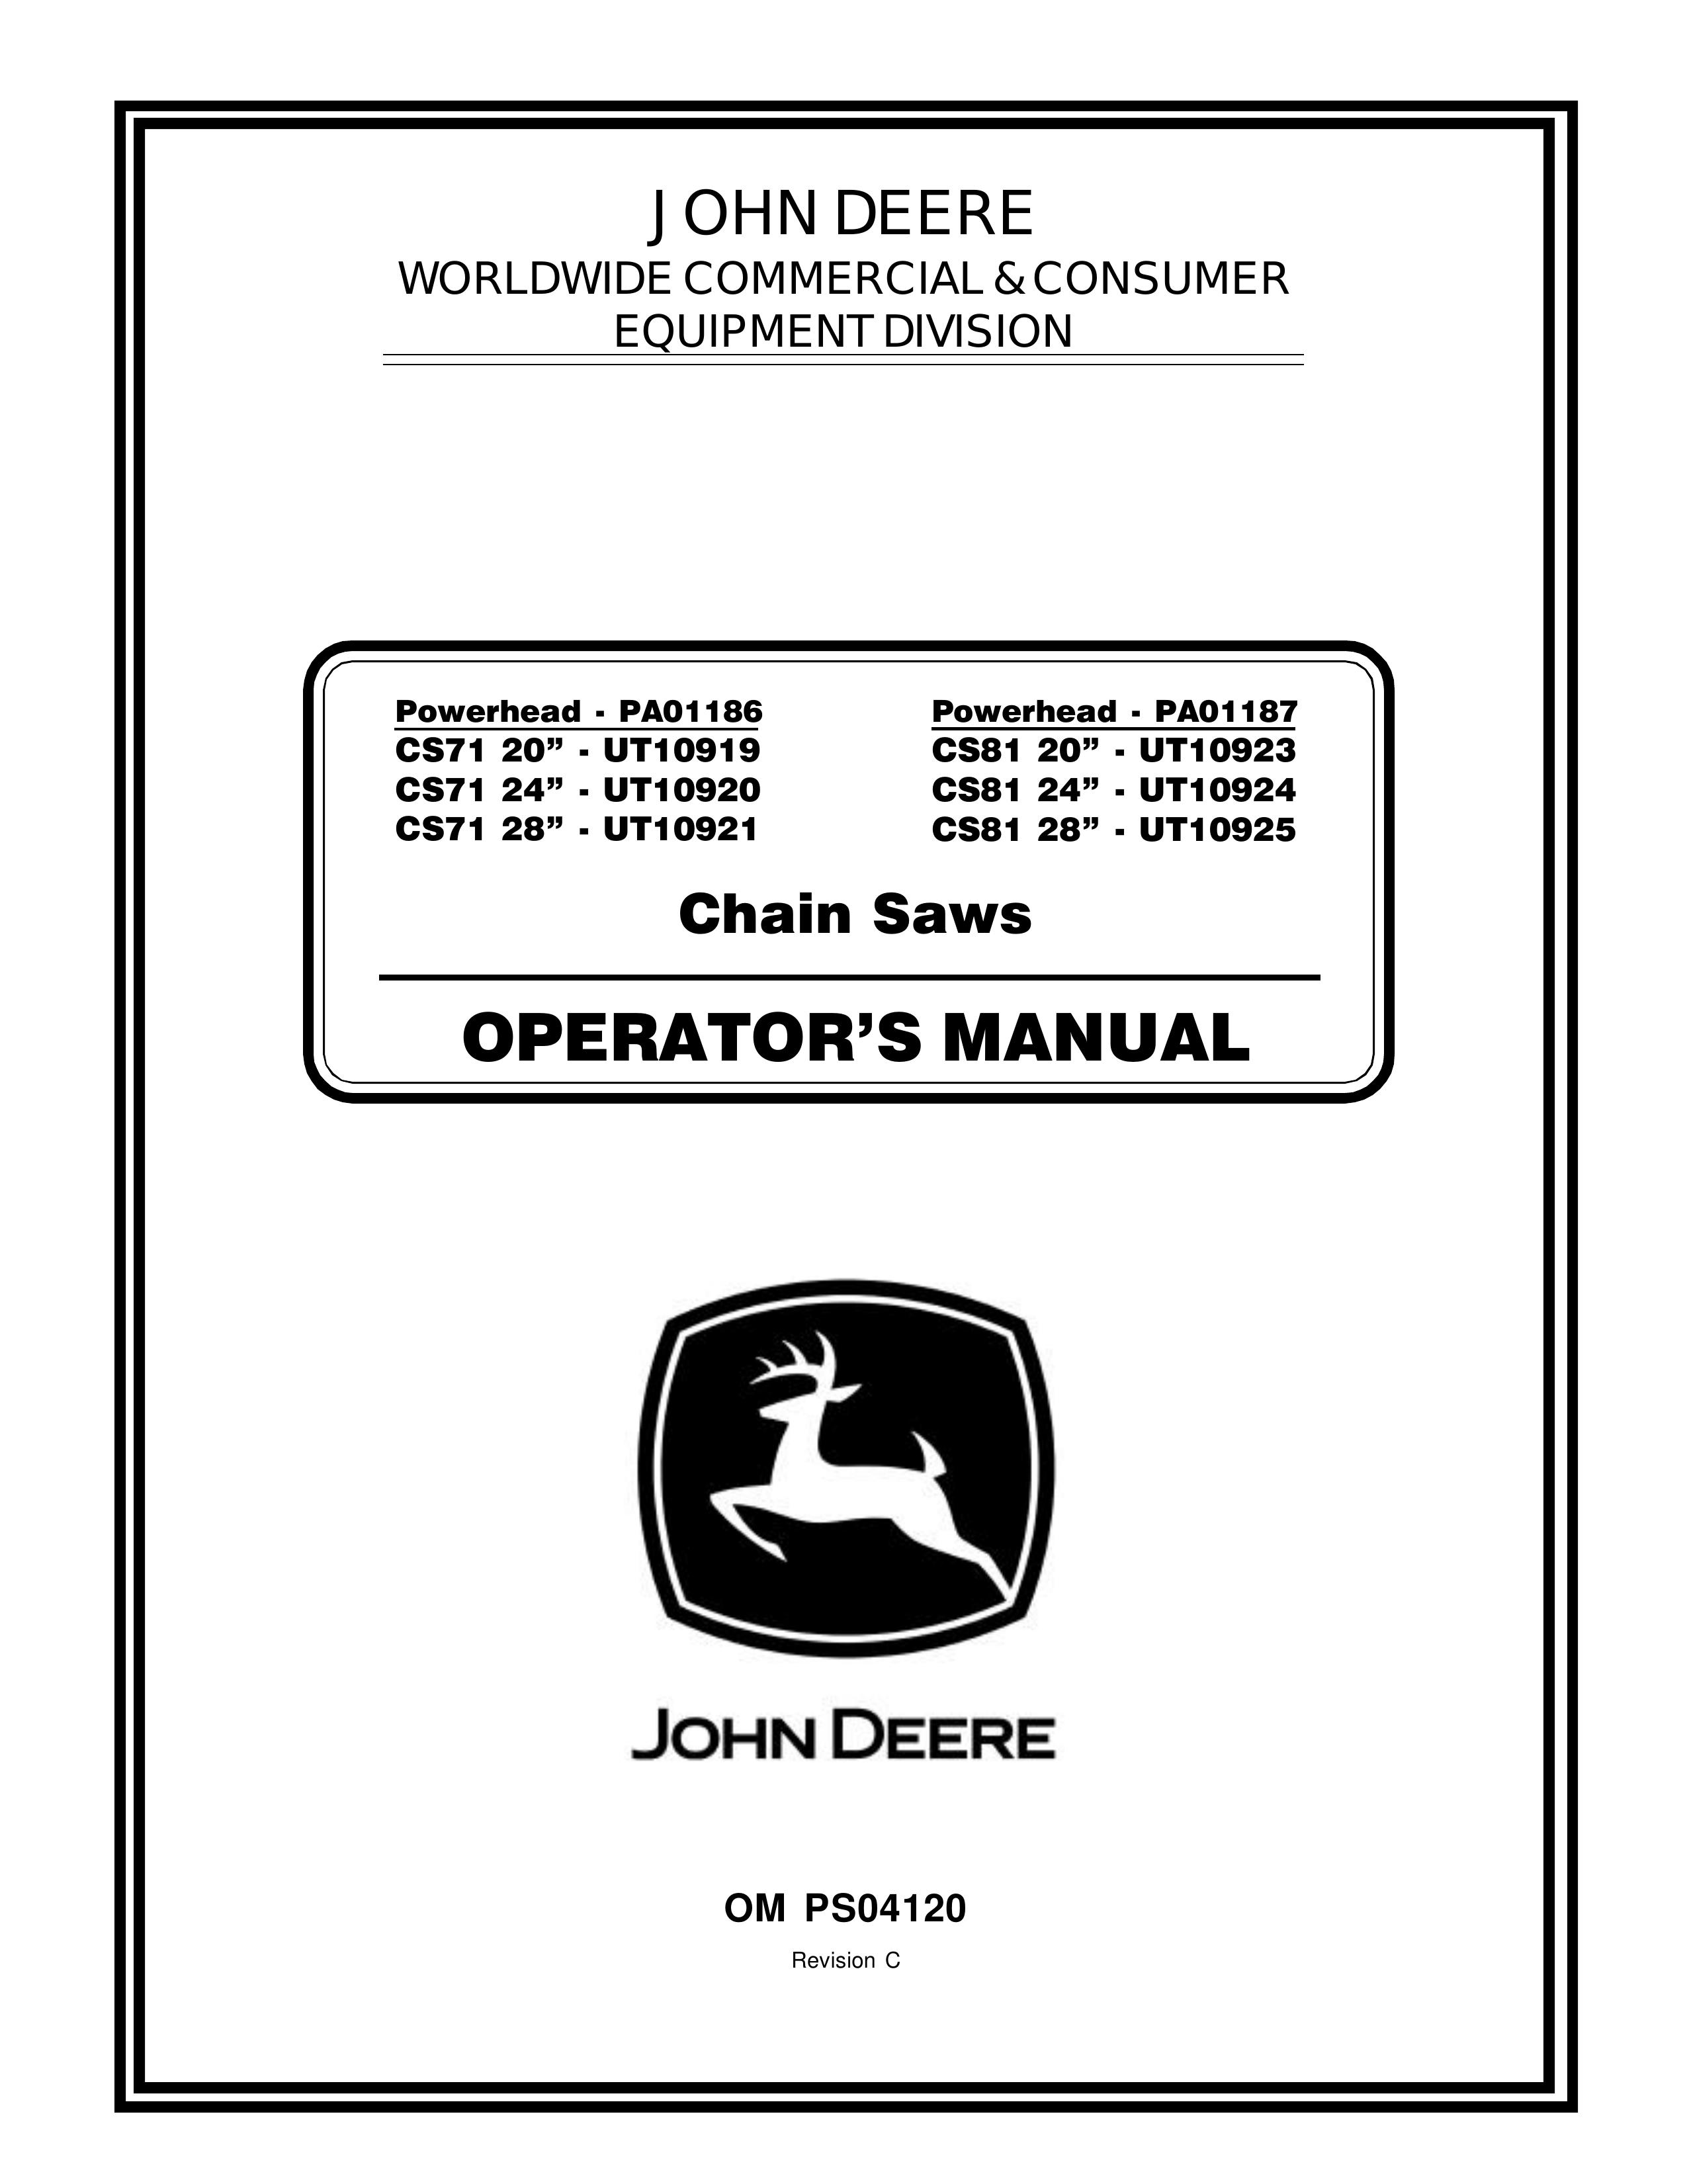 John Deere 28-inch UT10921 Chainsaw User Manual